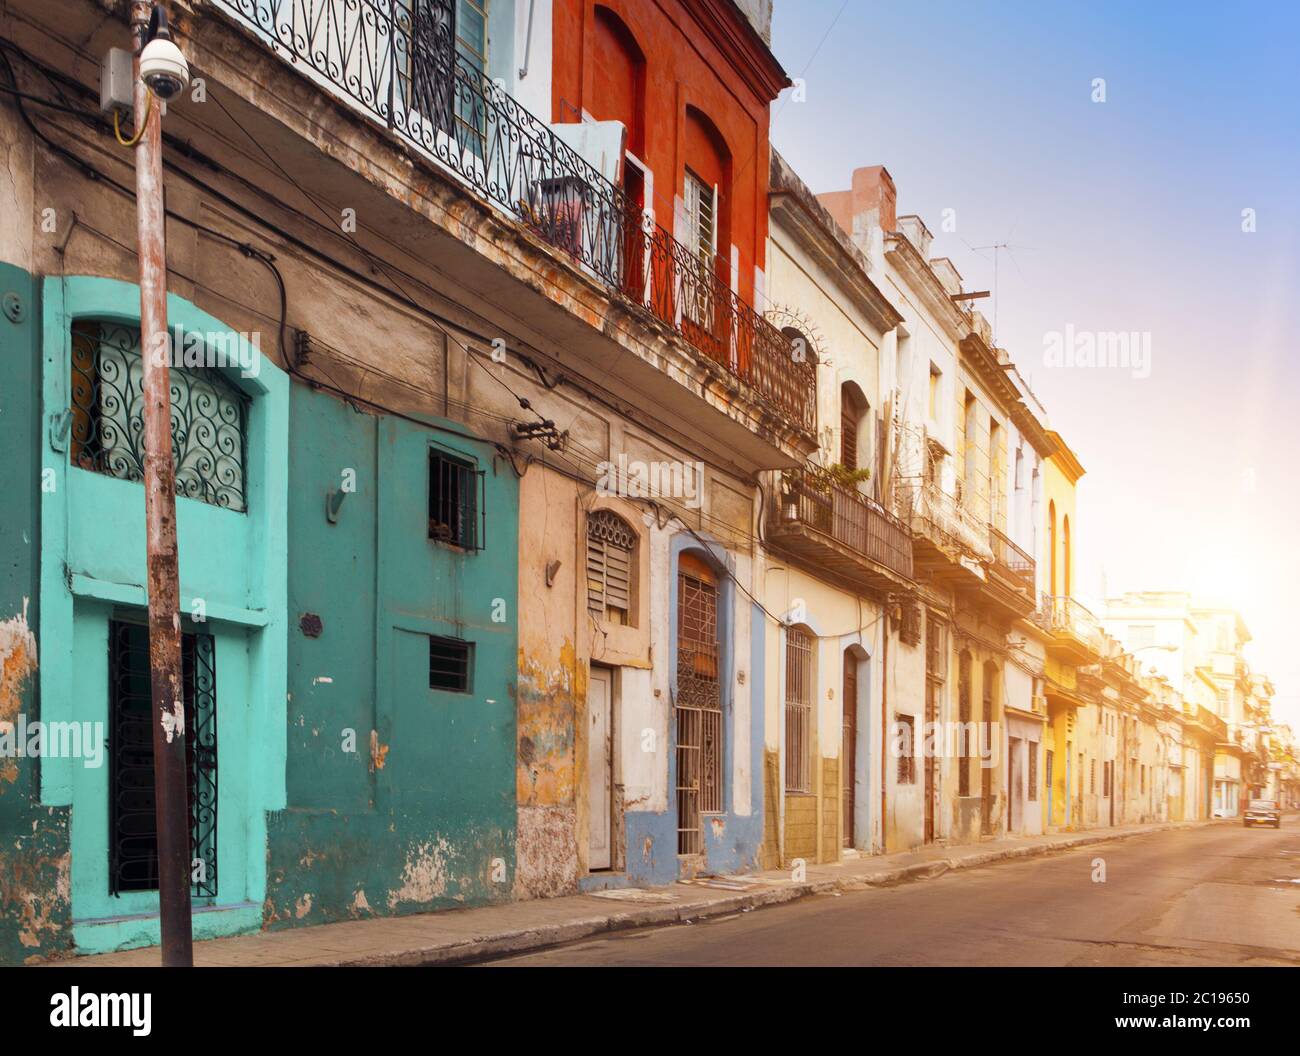 Cuba. Streets of Old Havana. Stock Photo